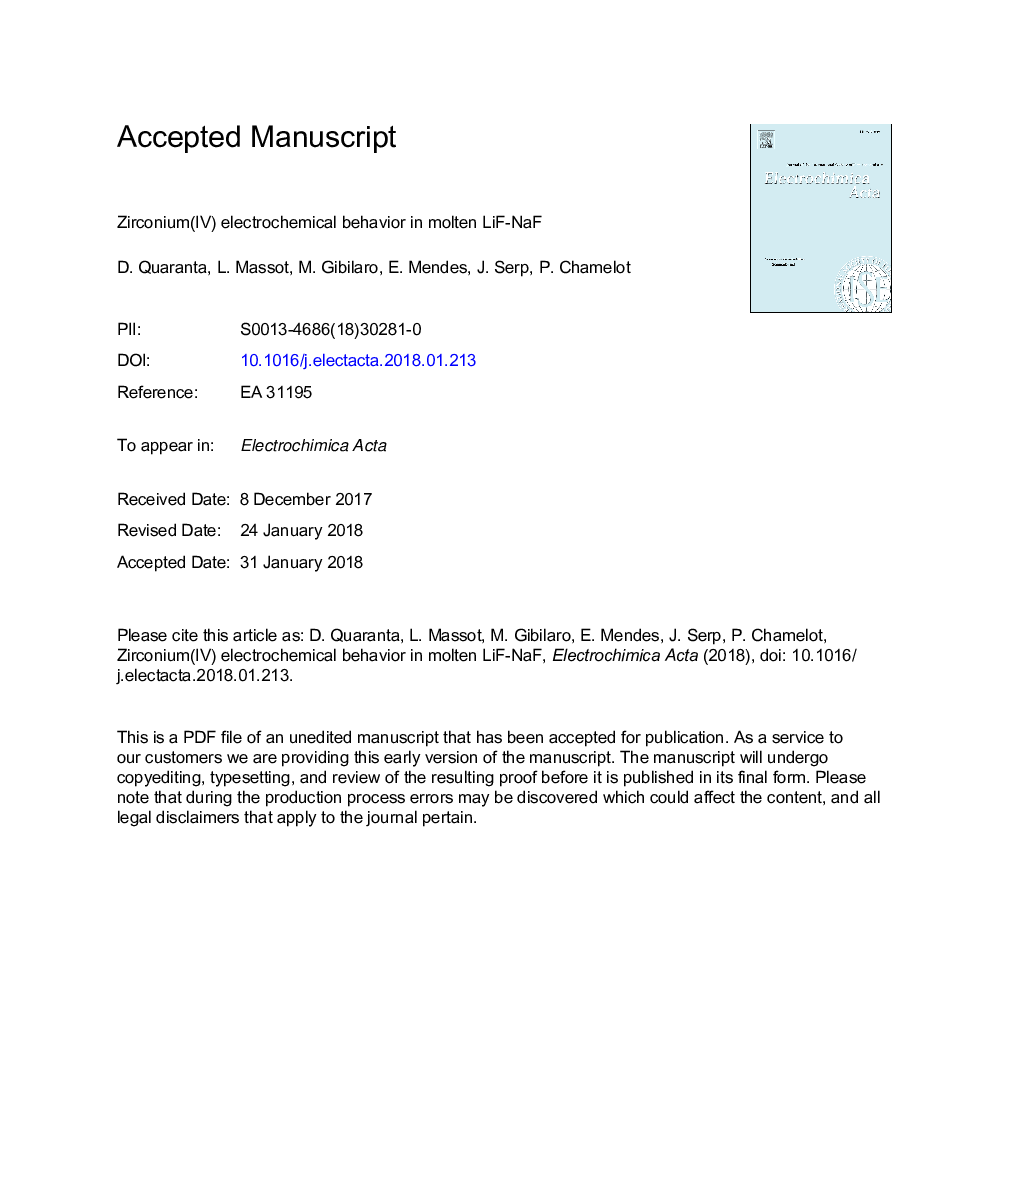 Zirconium(IV) electrochemical behavior in molten LiF-NaF